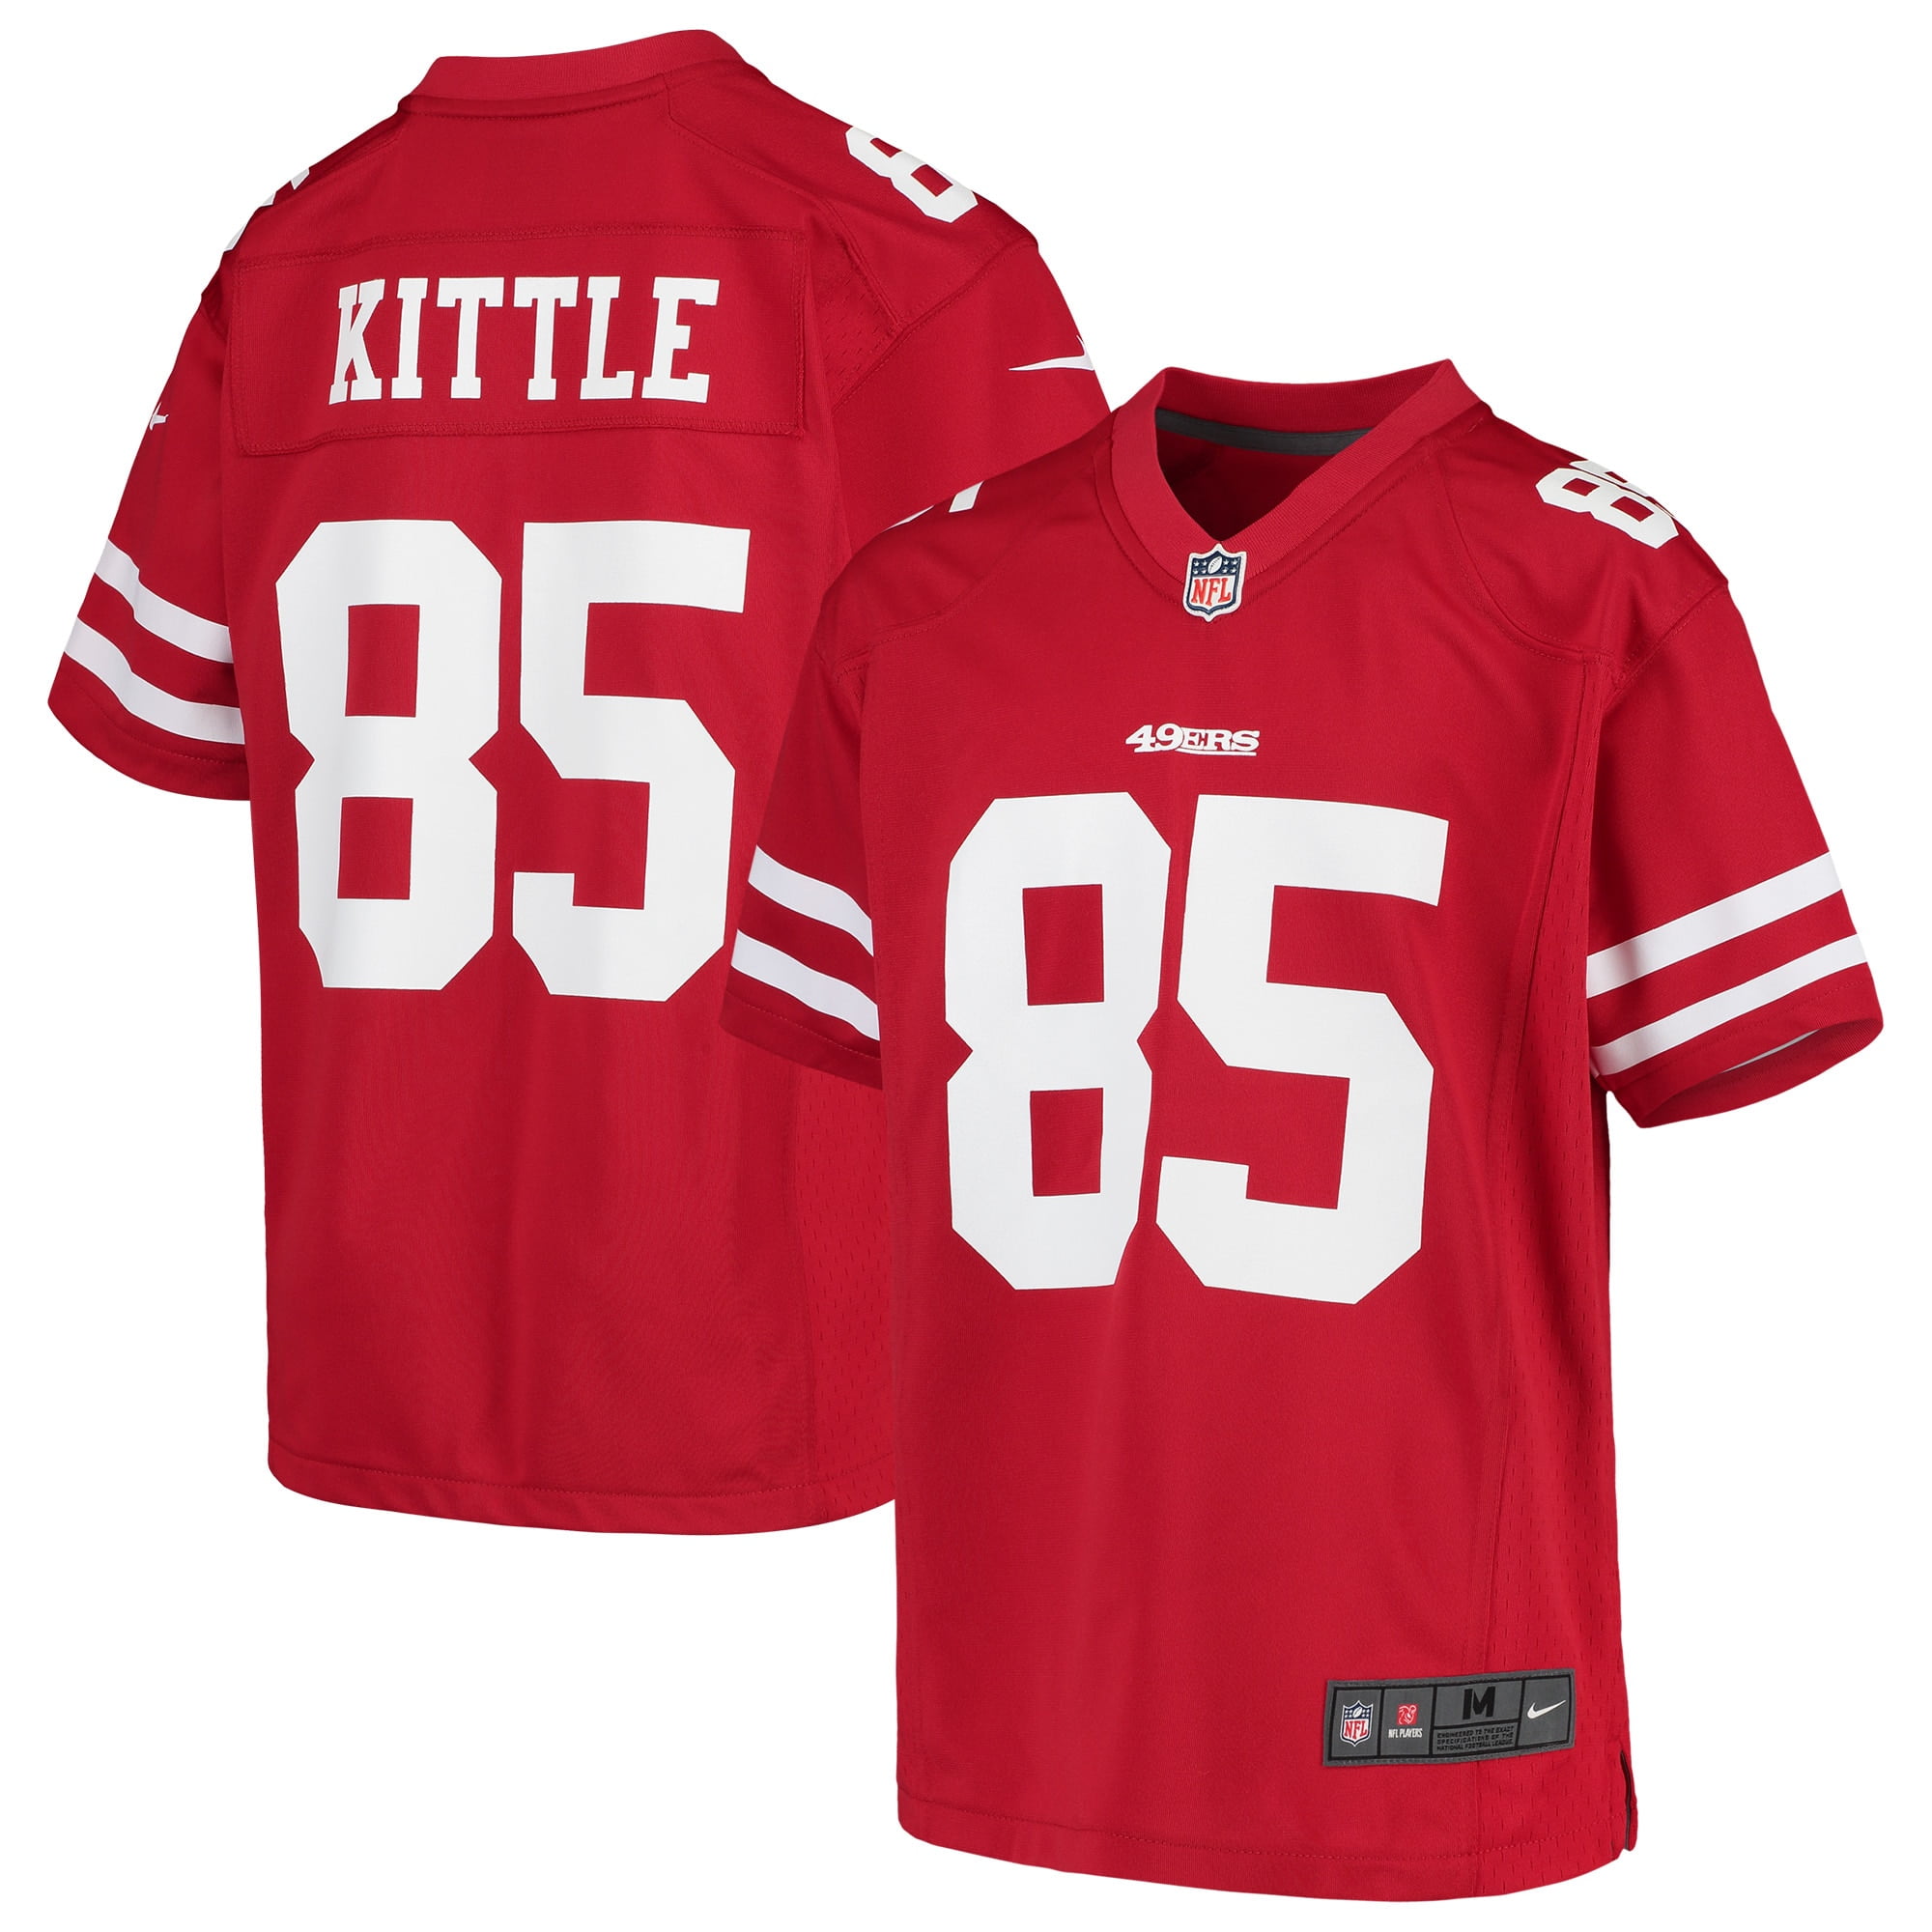 kittle 49ers jersey